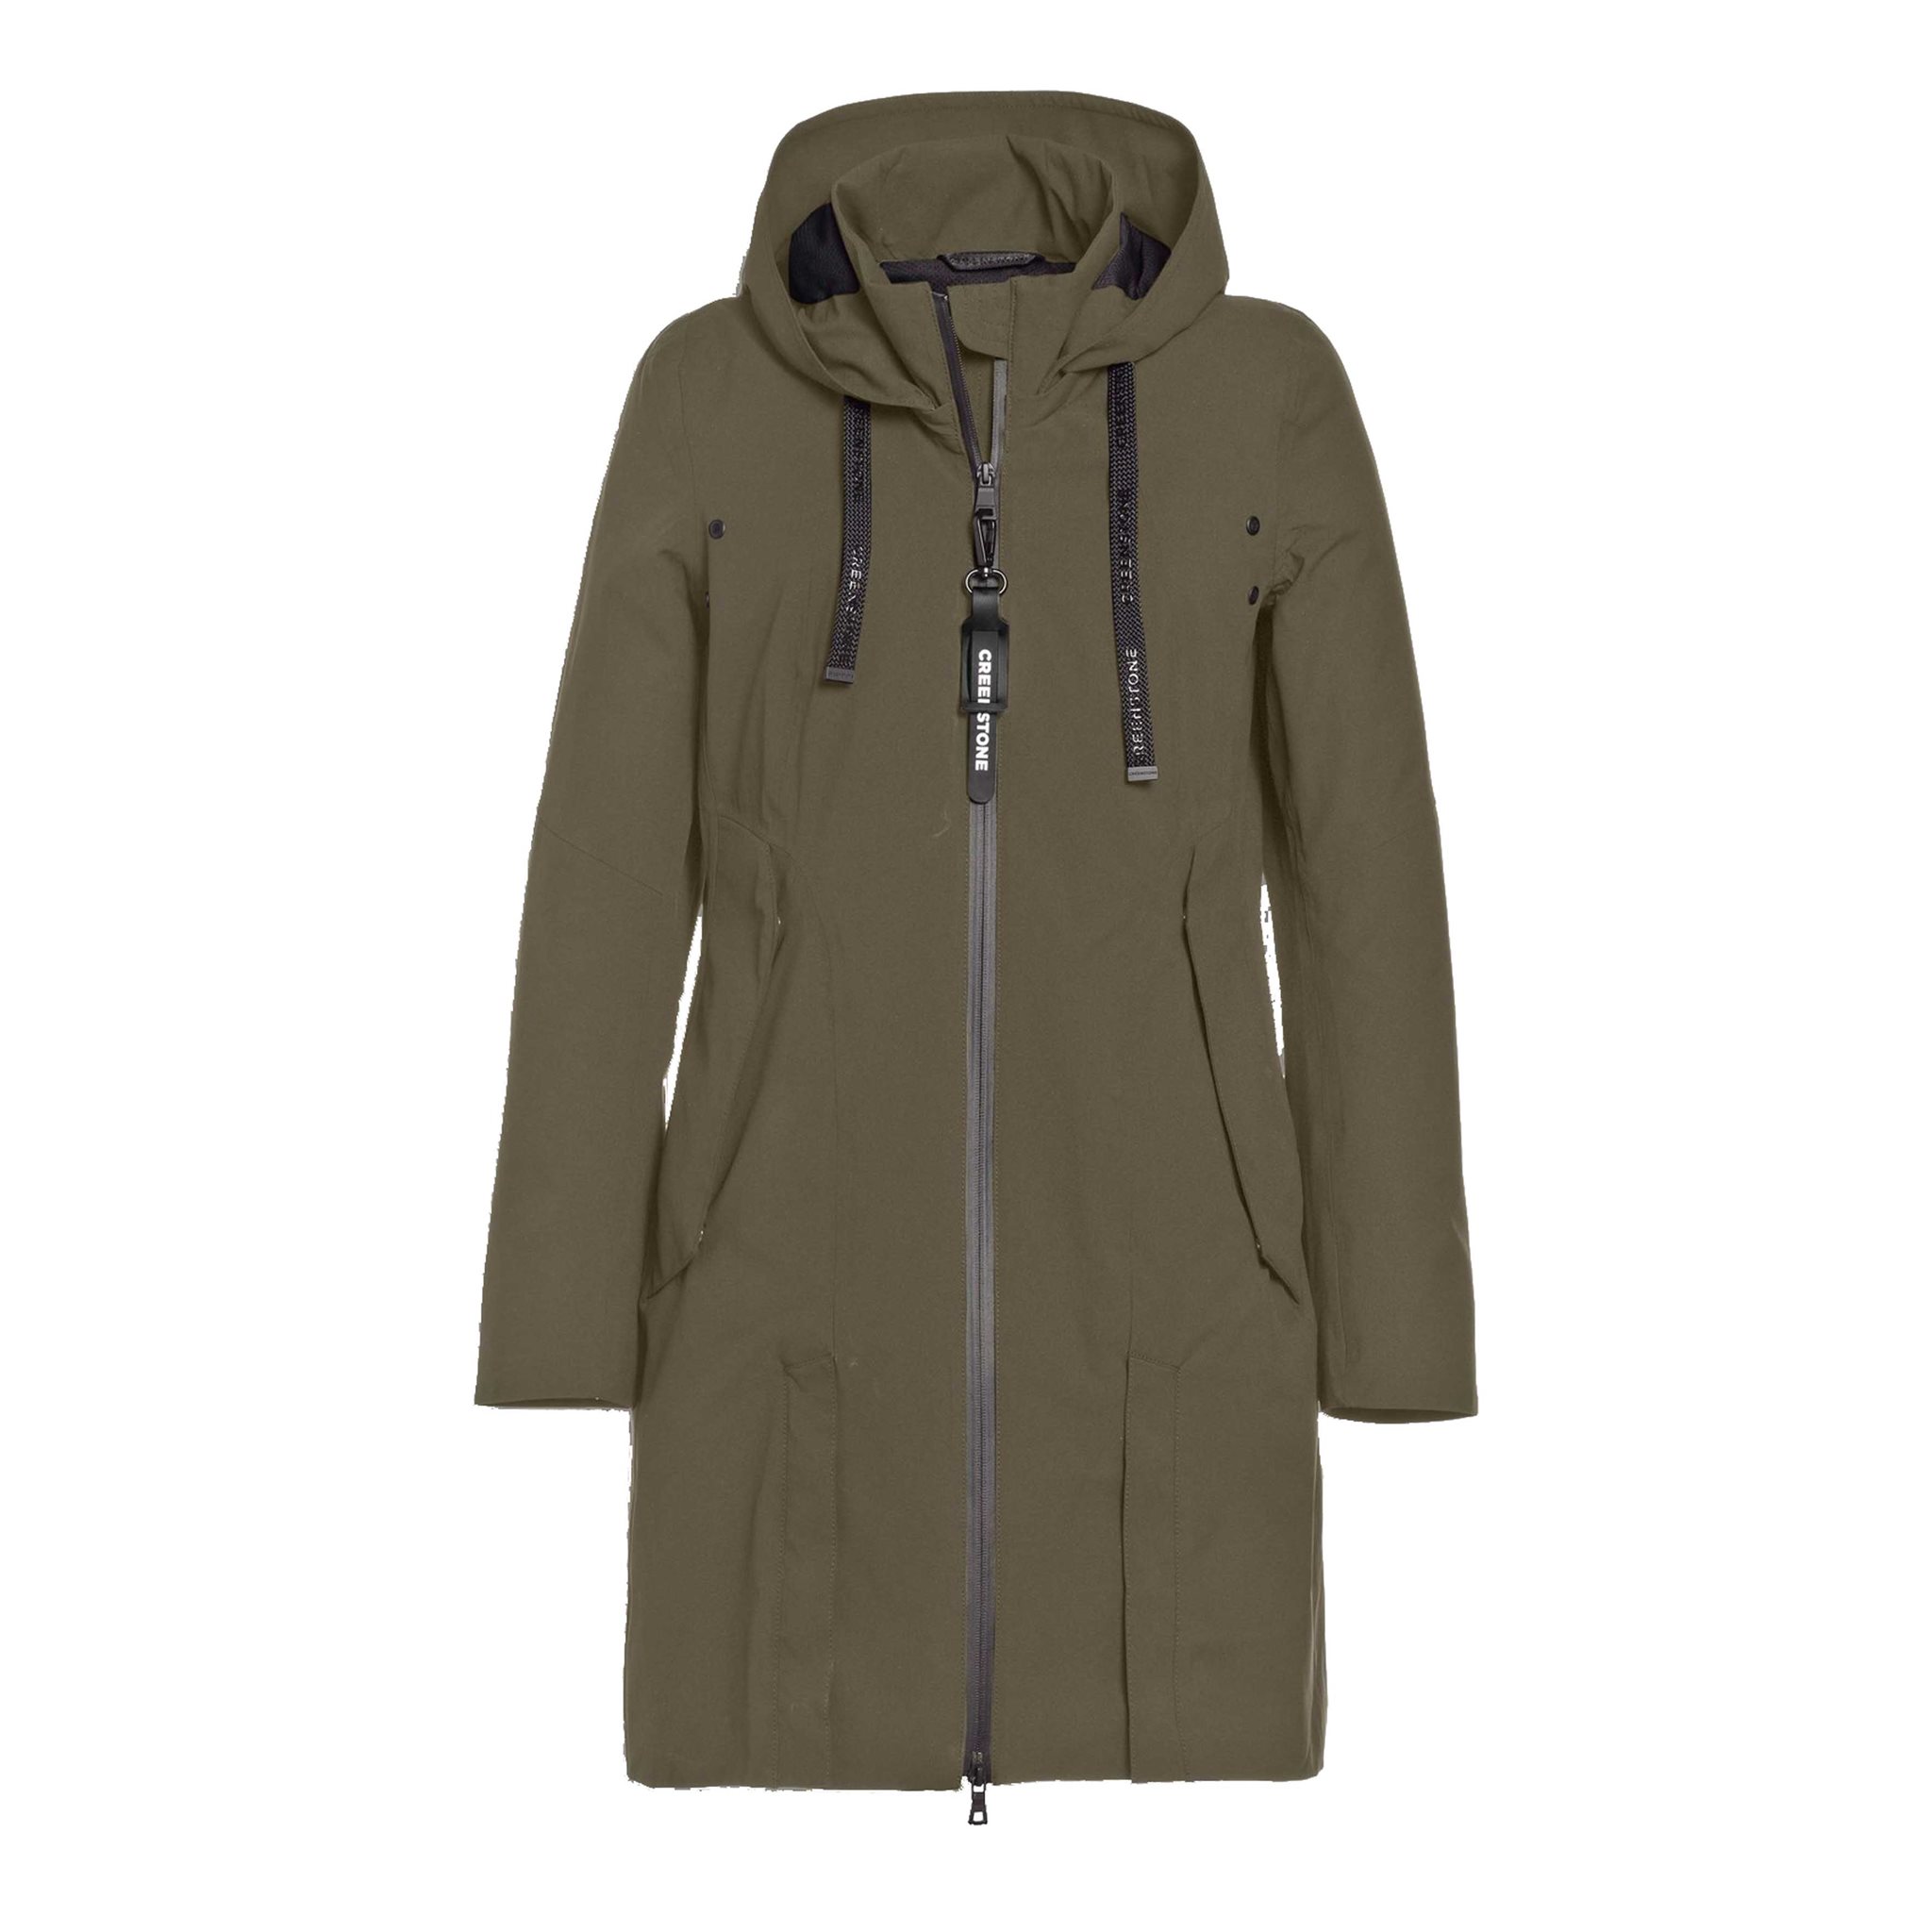 Raincoat with detachable hood CREENSTONE